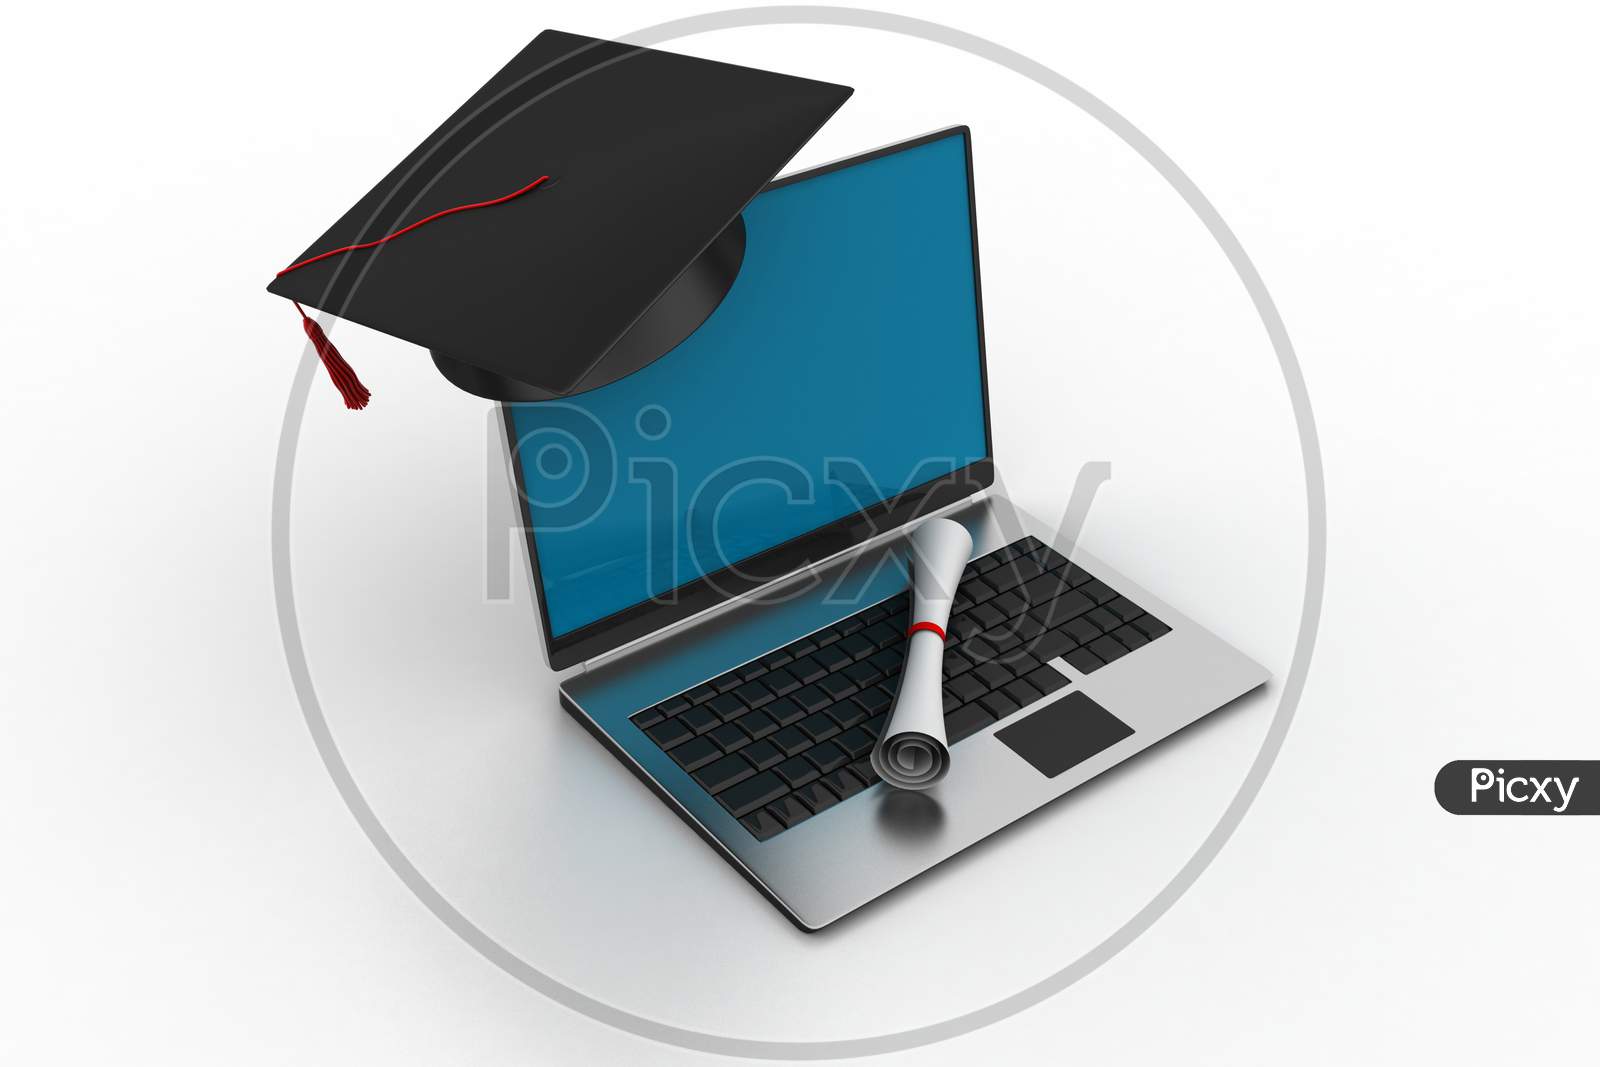 Graduation Hat And Diploma